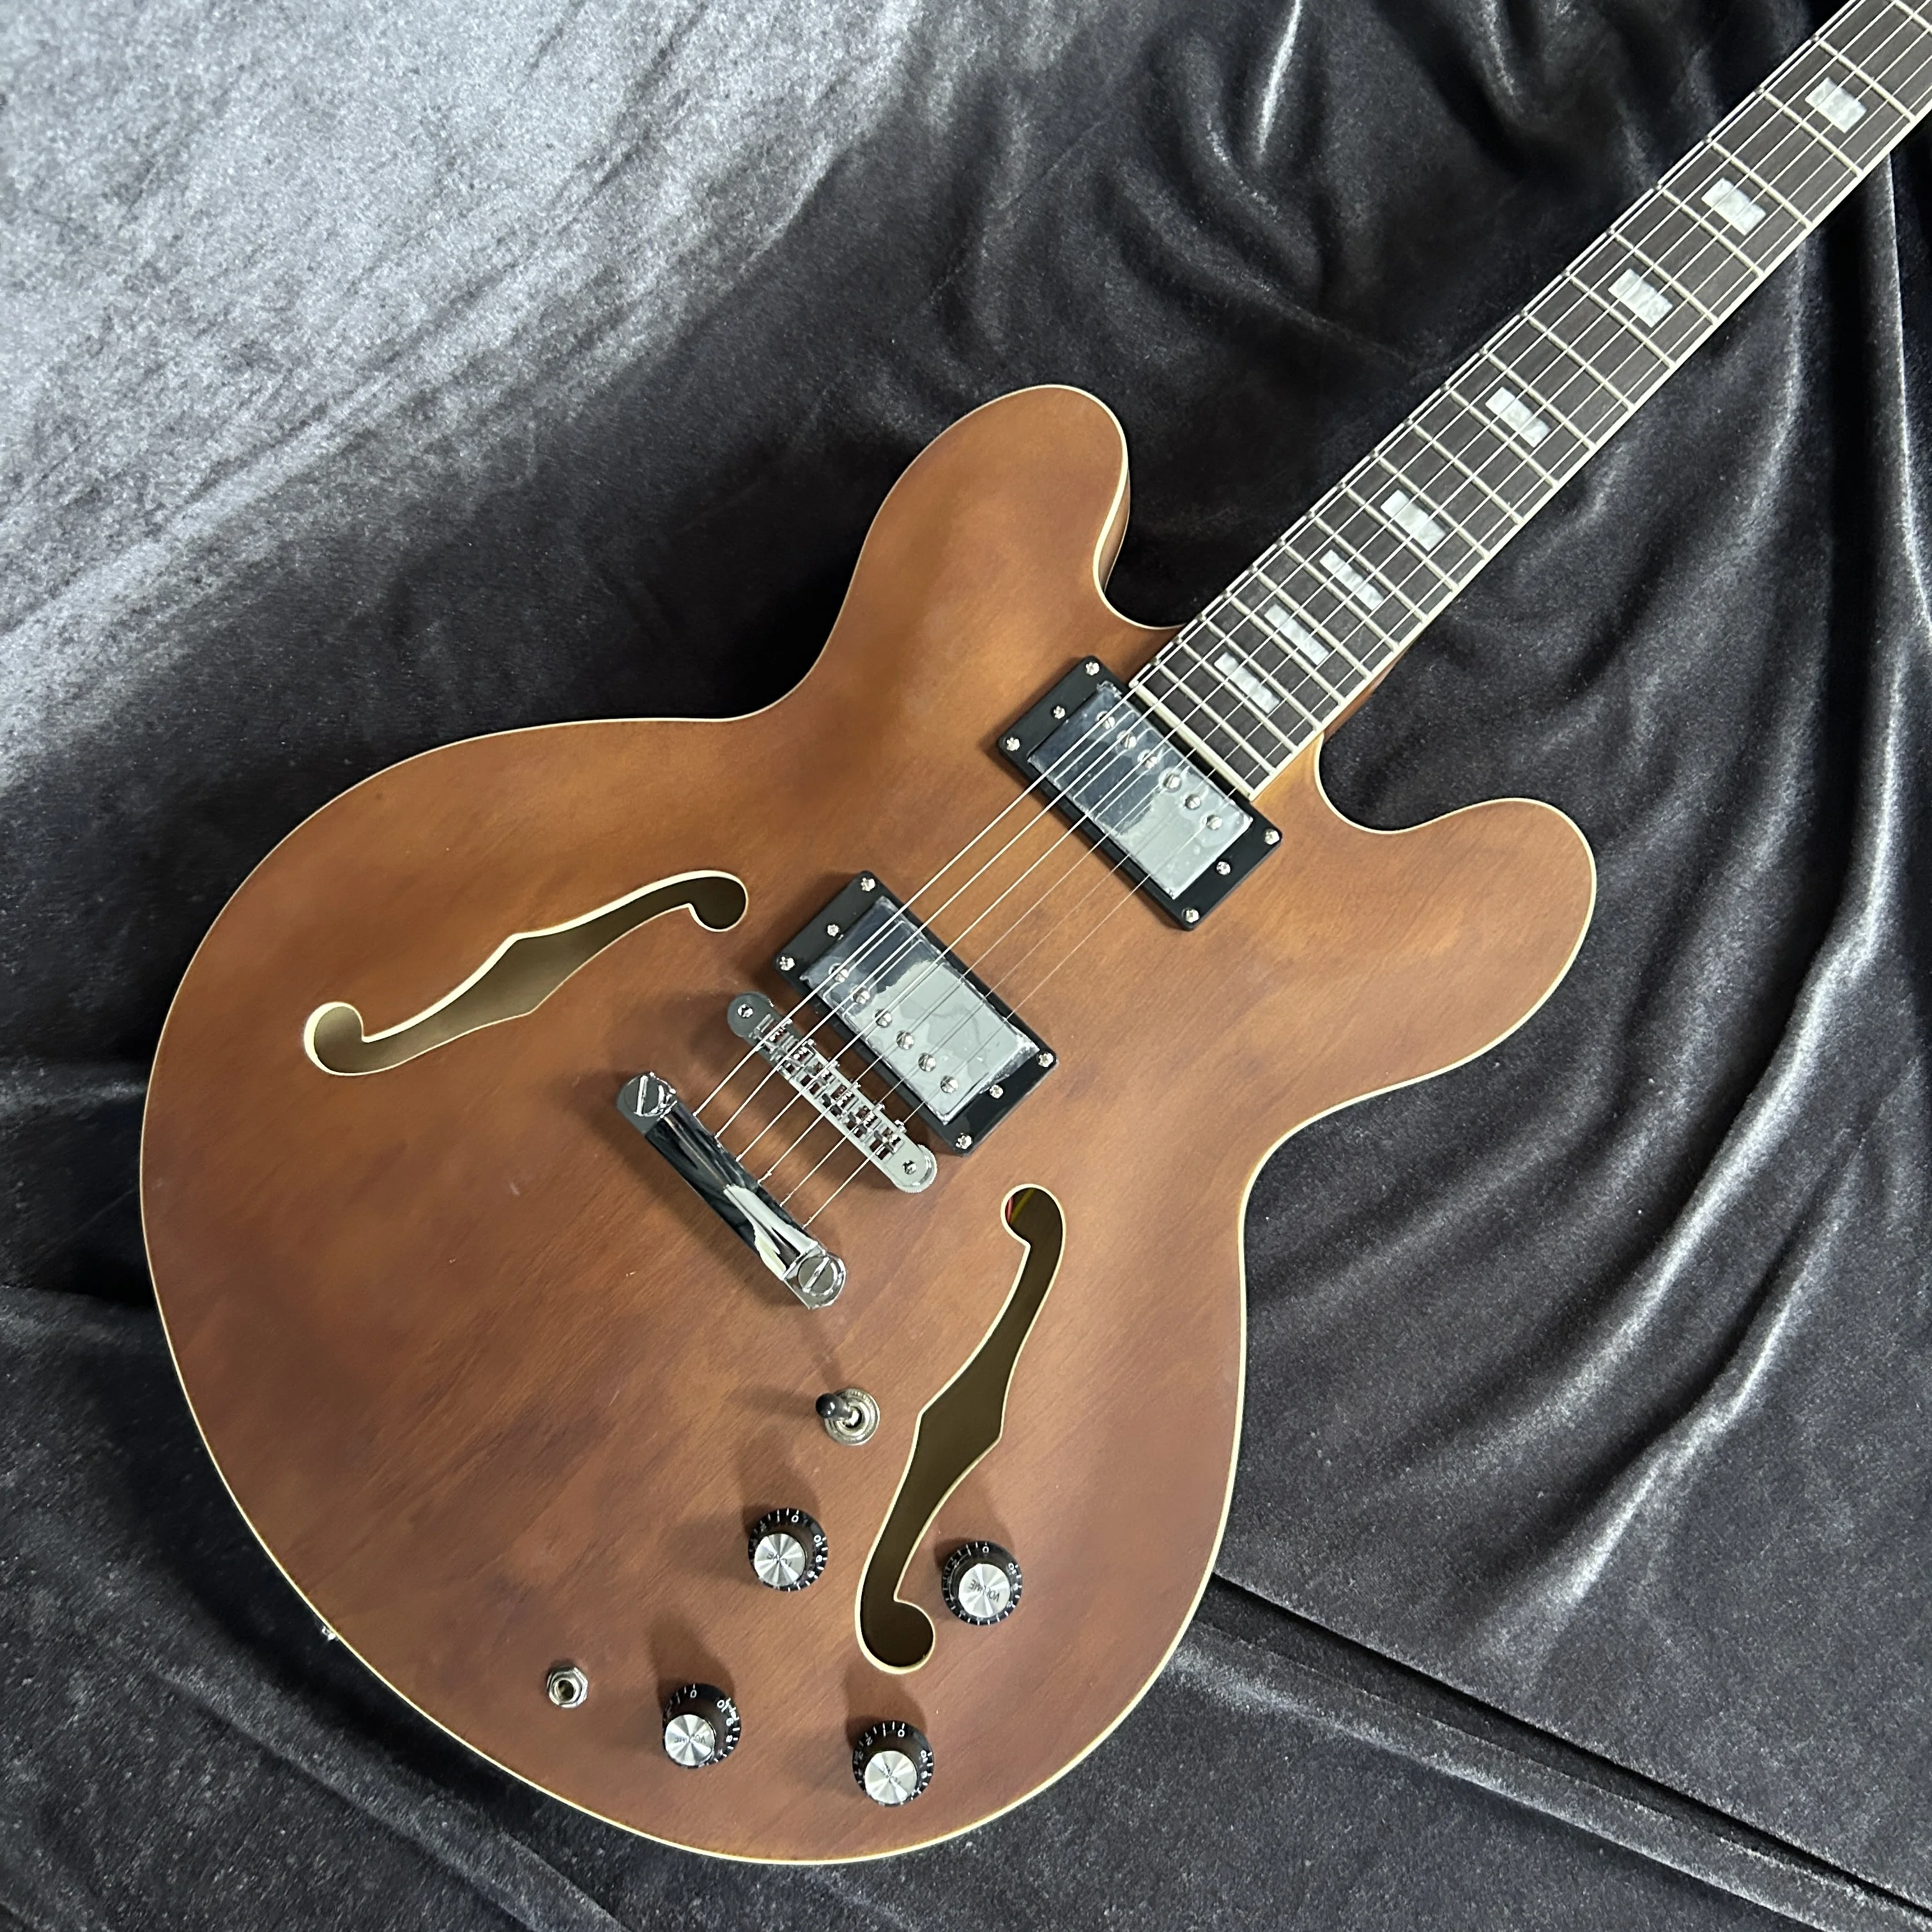 

ES 335 Electric Guitar, Brown Color, Semi Hollow Body, Rosewood Fingerboard, 6 Strings Guitarra, Free Shipping